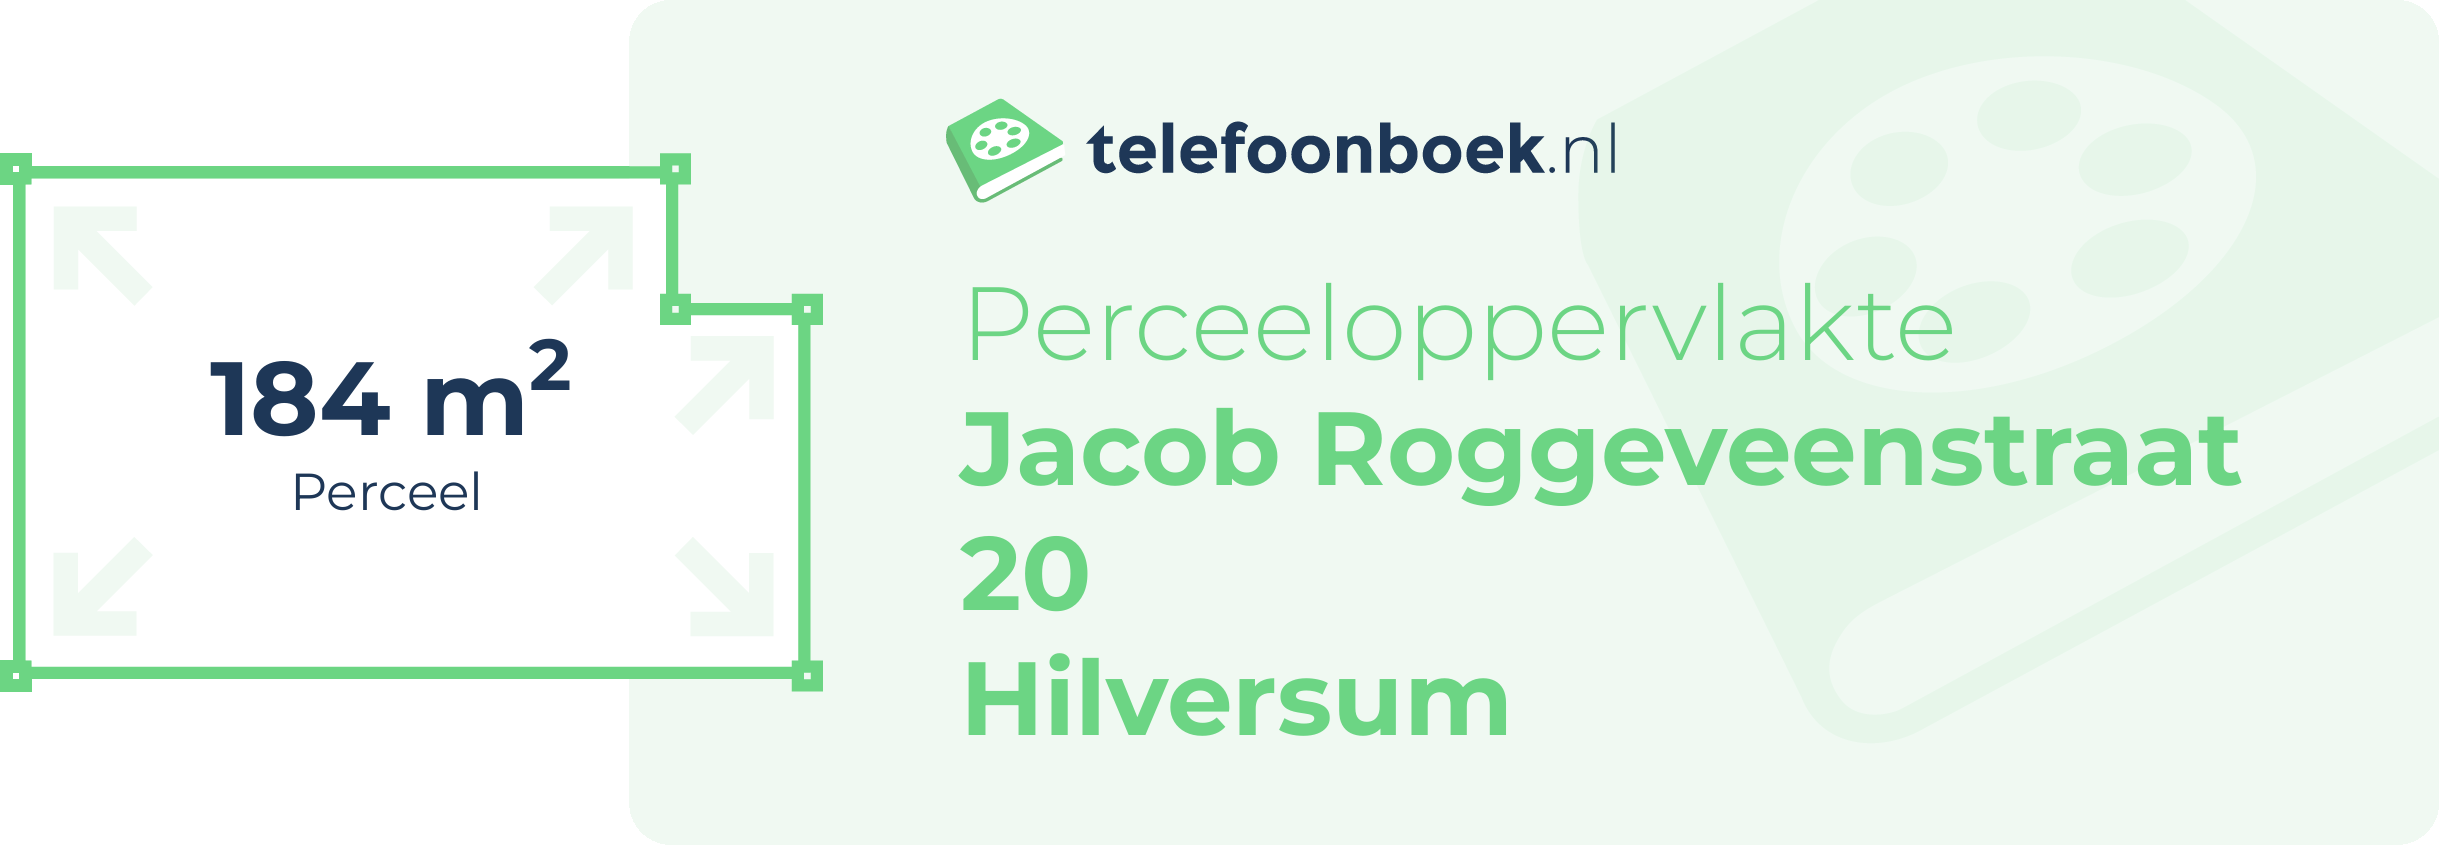 Perceeloppervlakte Jacob Roggeveenstraat 20 Hilversum